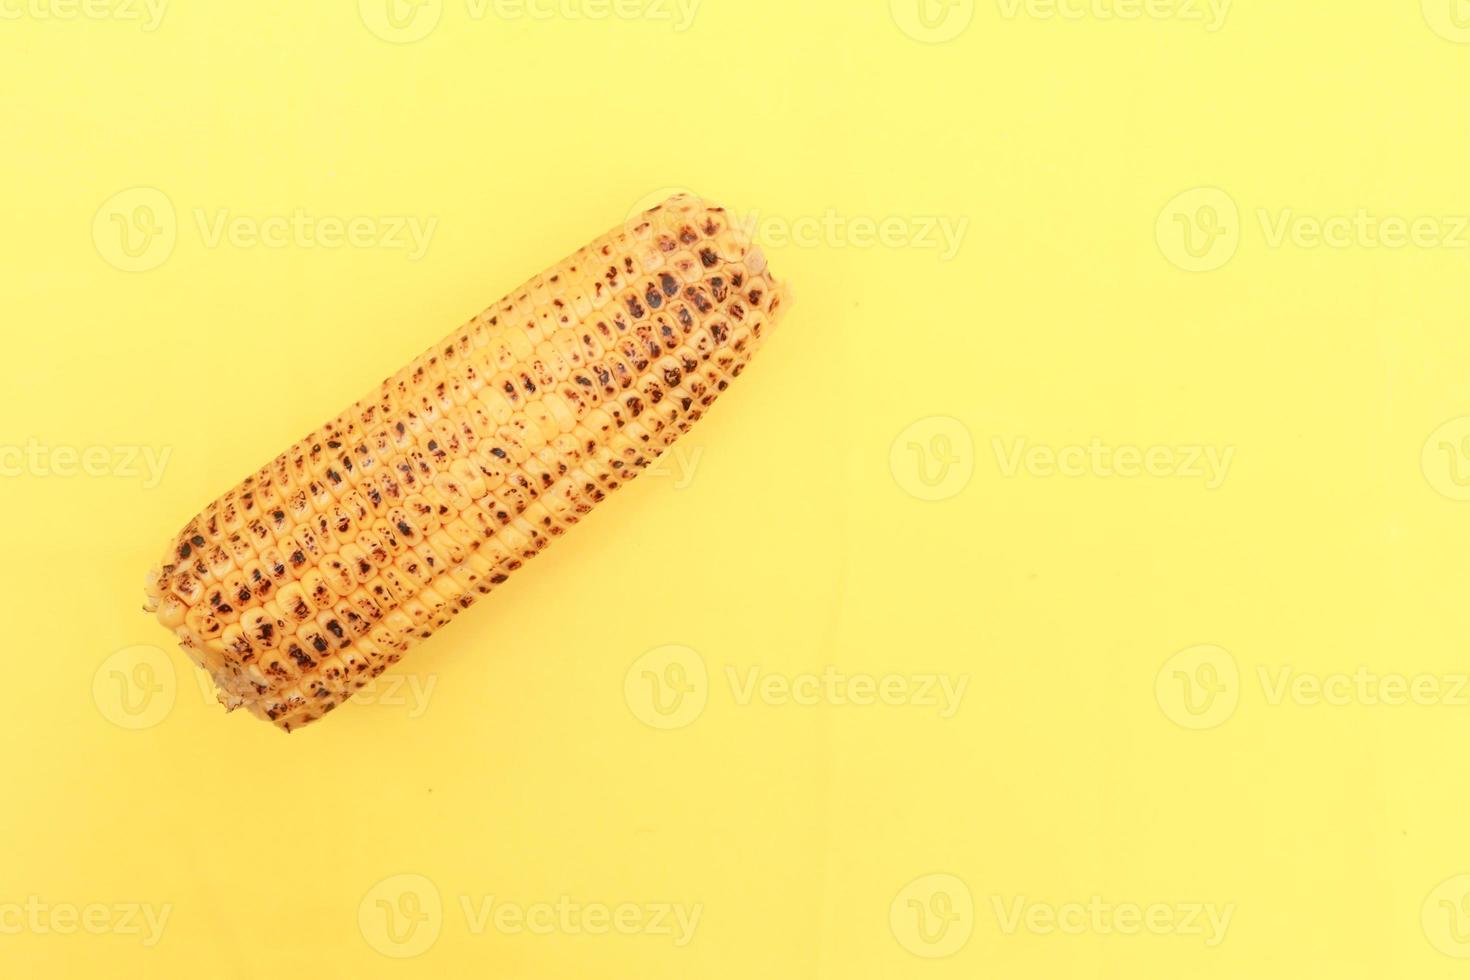 corn cob on yellow background close up photo